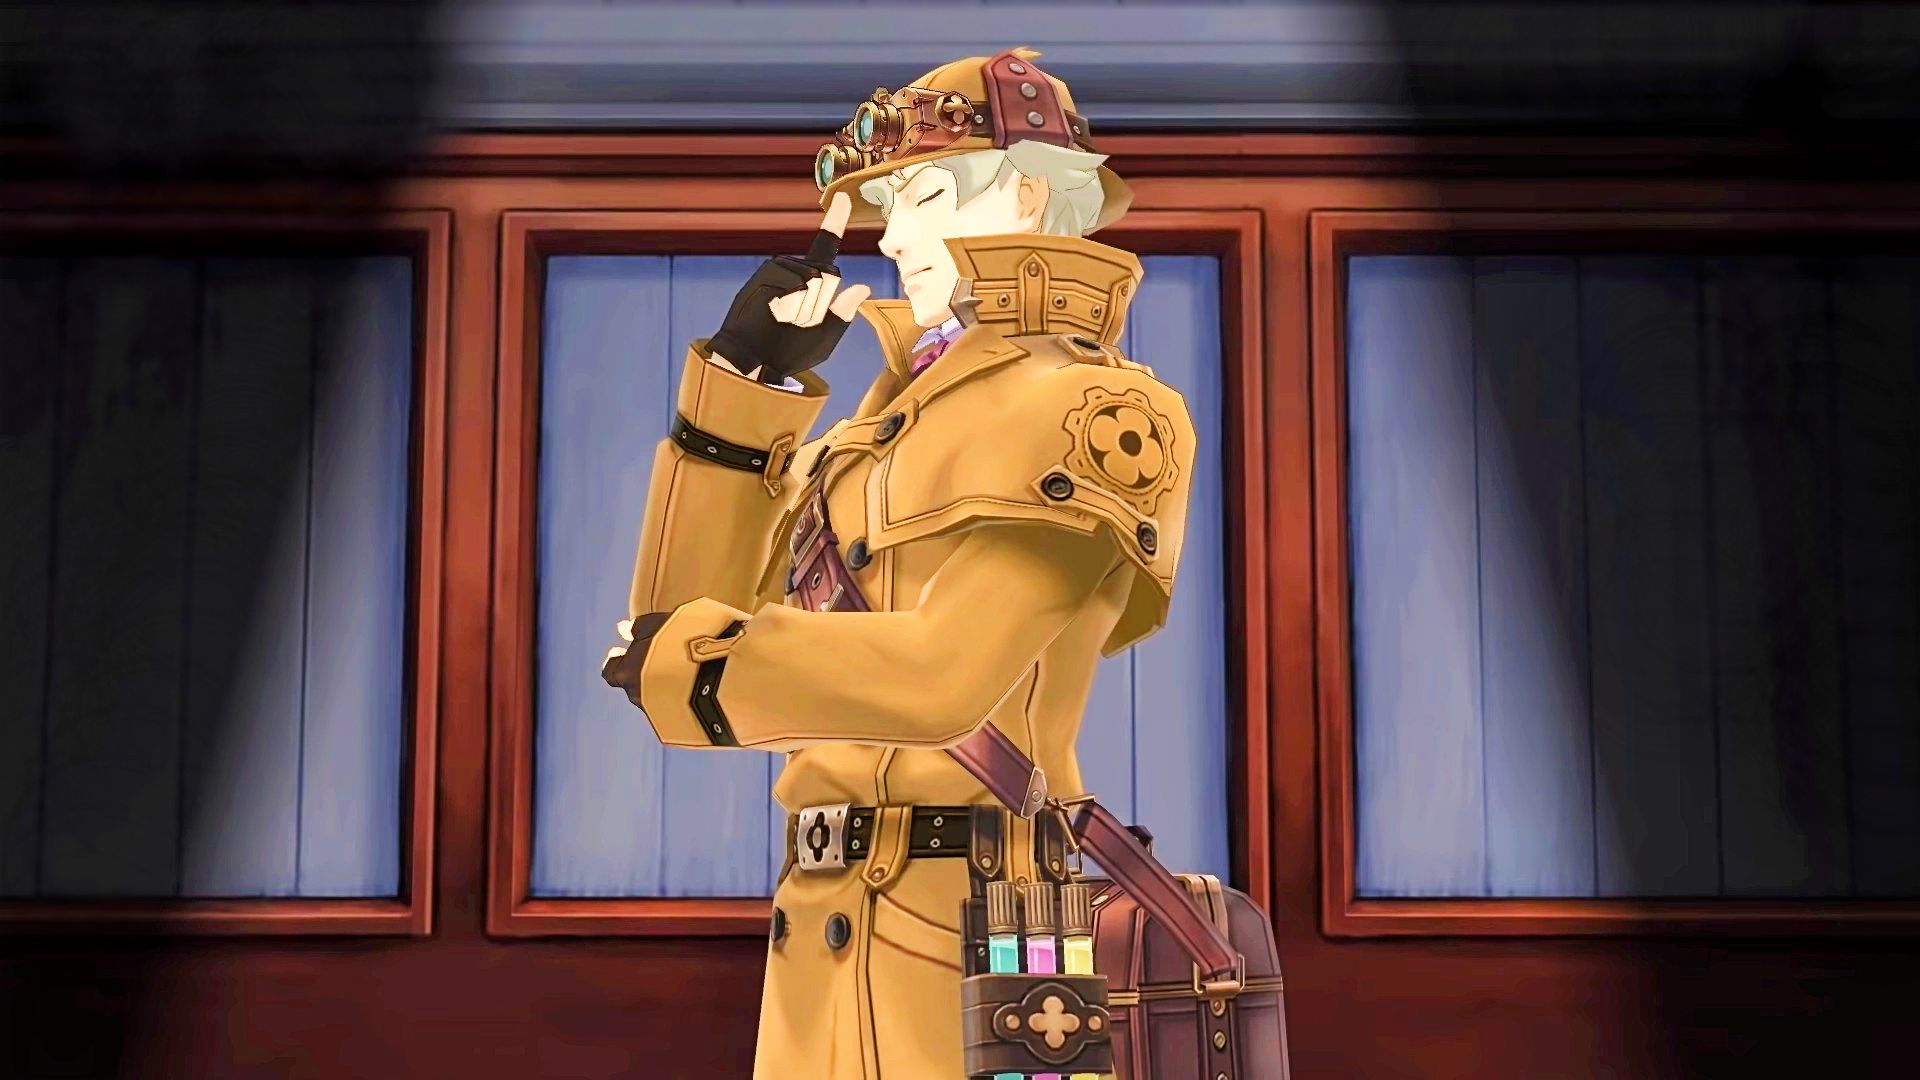 Game Anime Terbaik: The Great Ace Attorney Chronicles. Gambar menunjukkan karakter Herlock Sholmes, parodi Sherlock Holmes